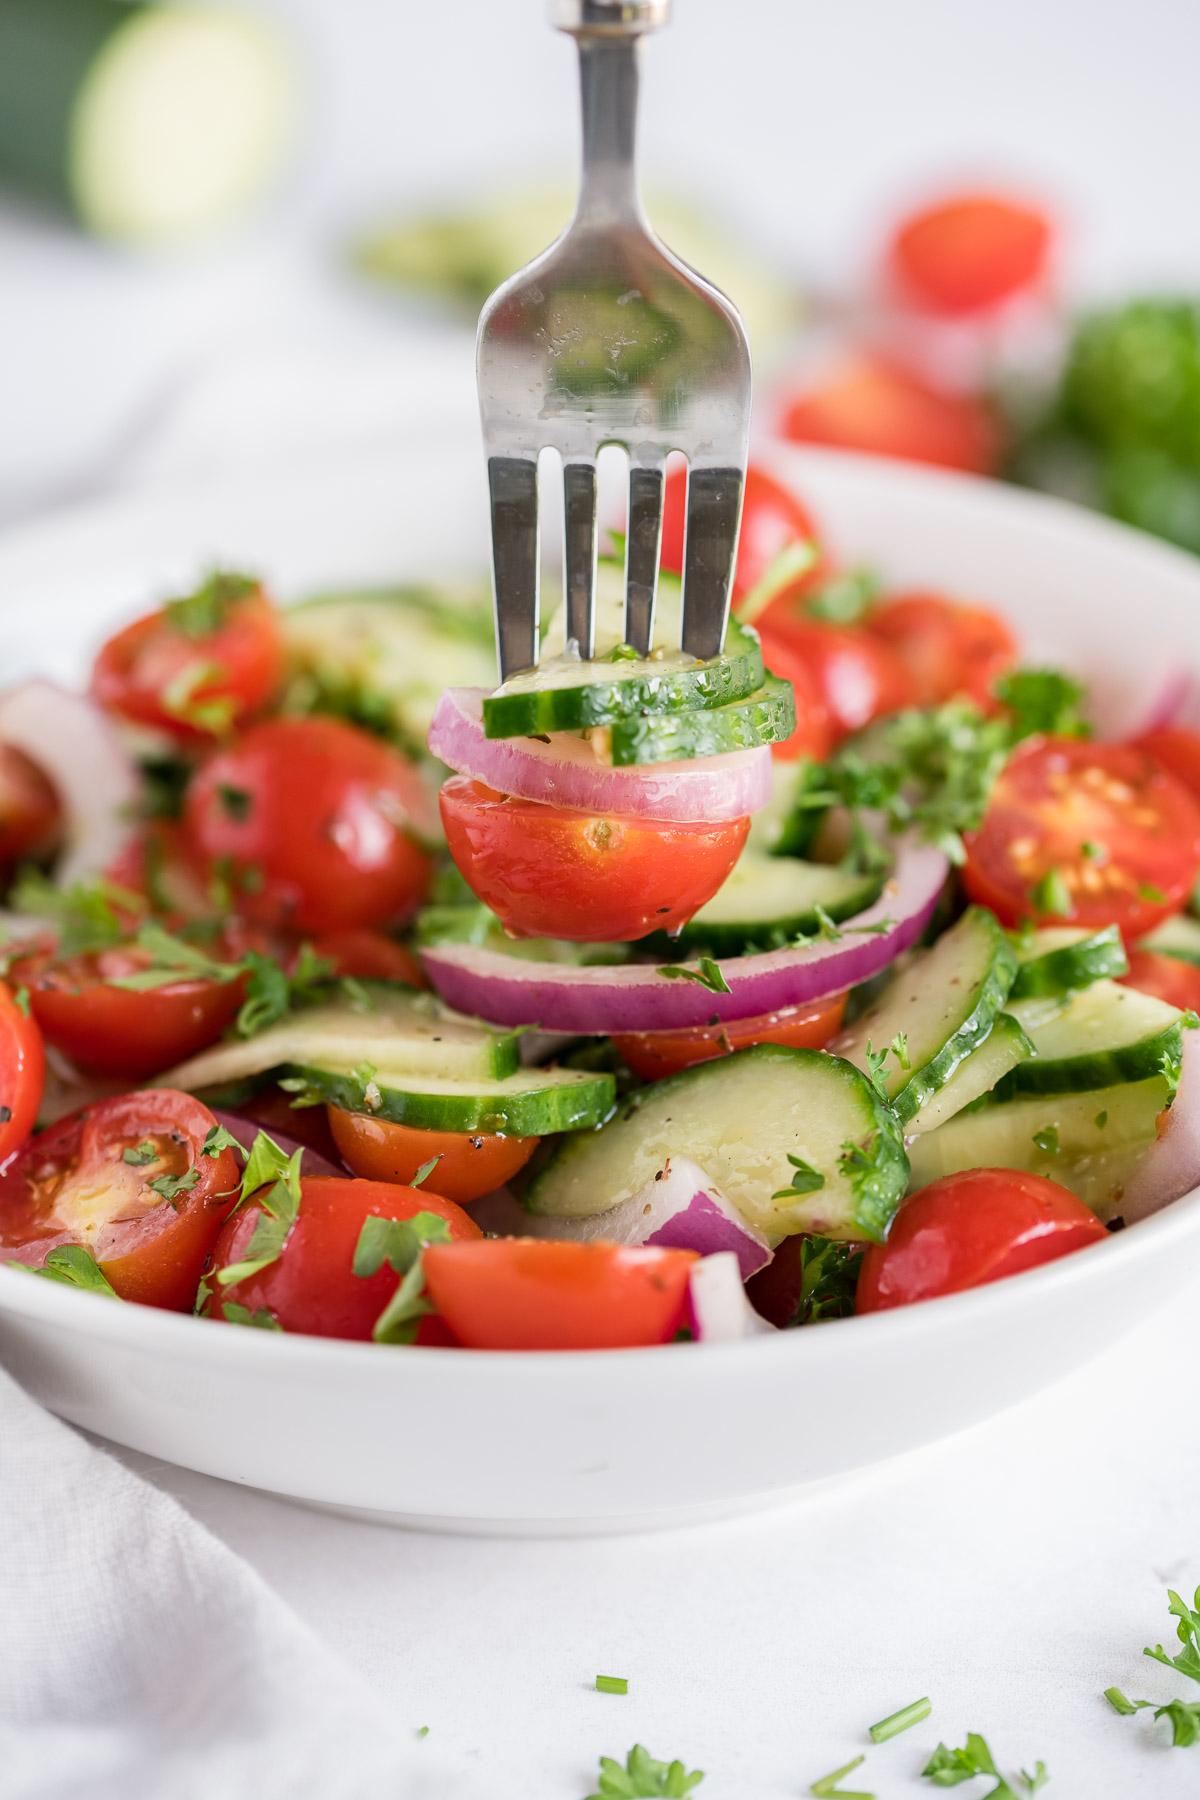 A fork picks out a serving of vegetable salad.